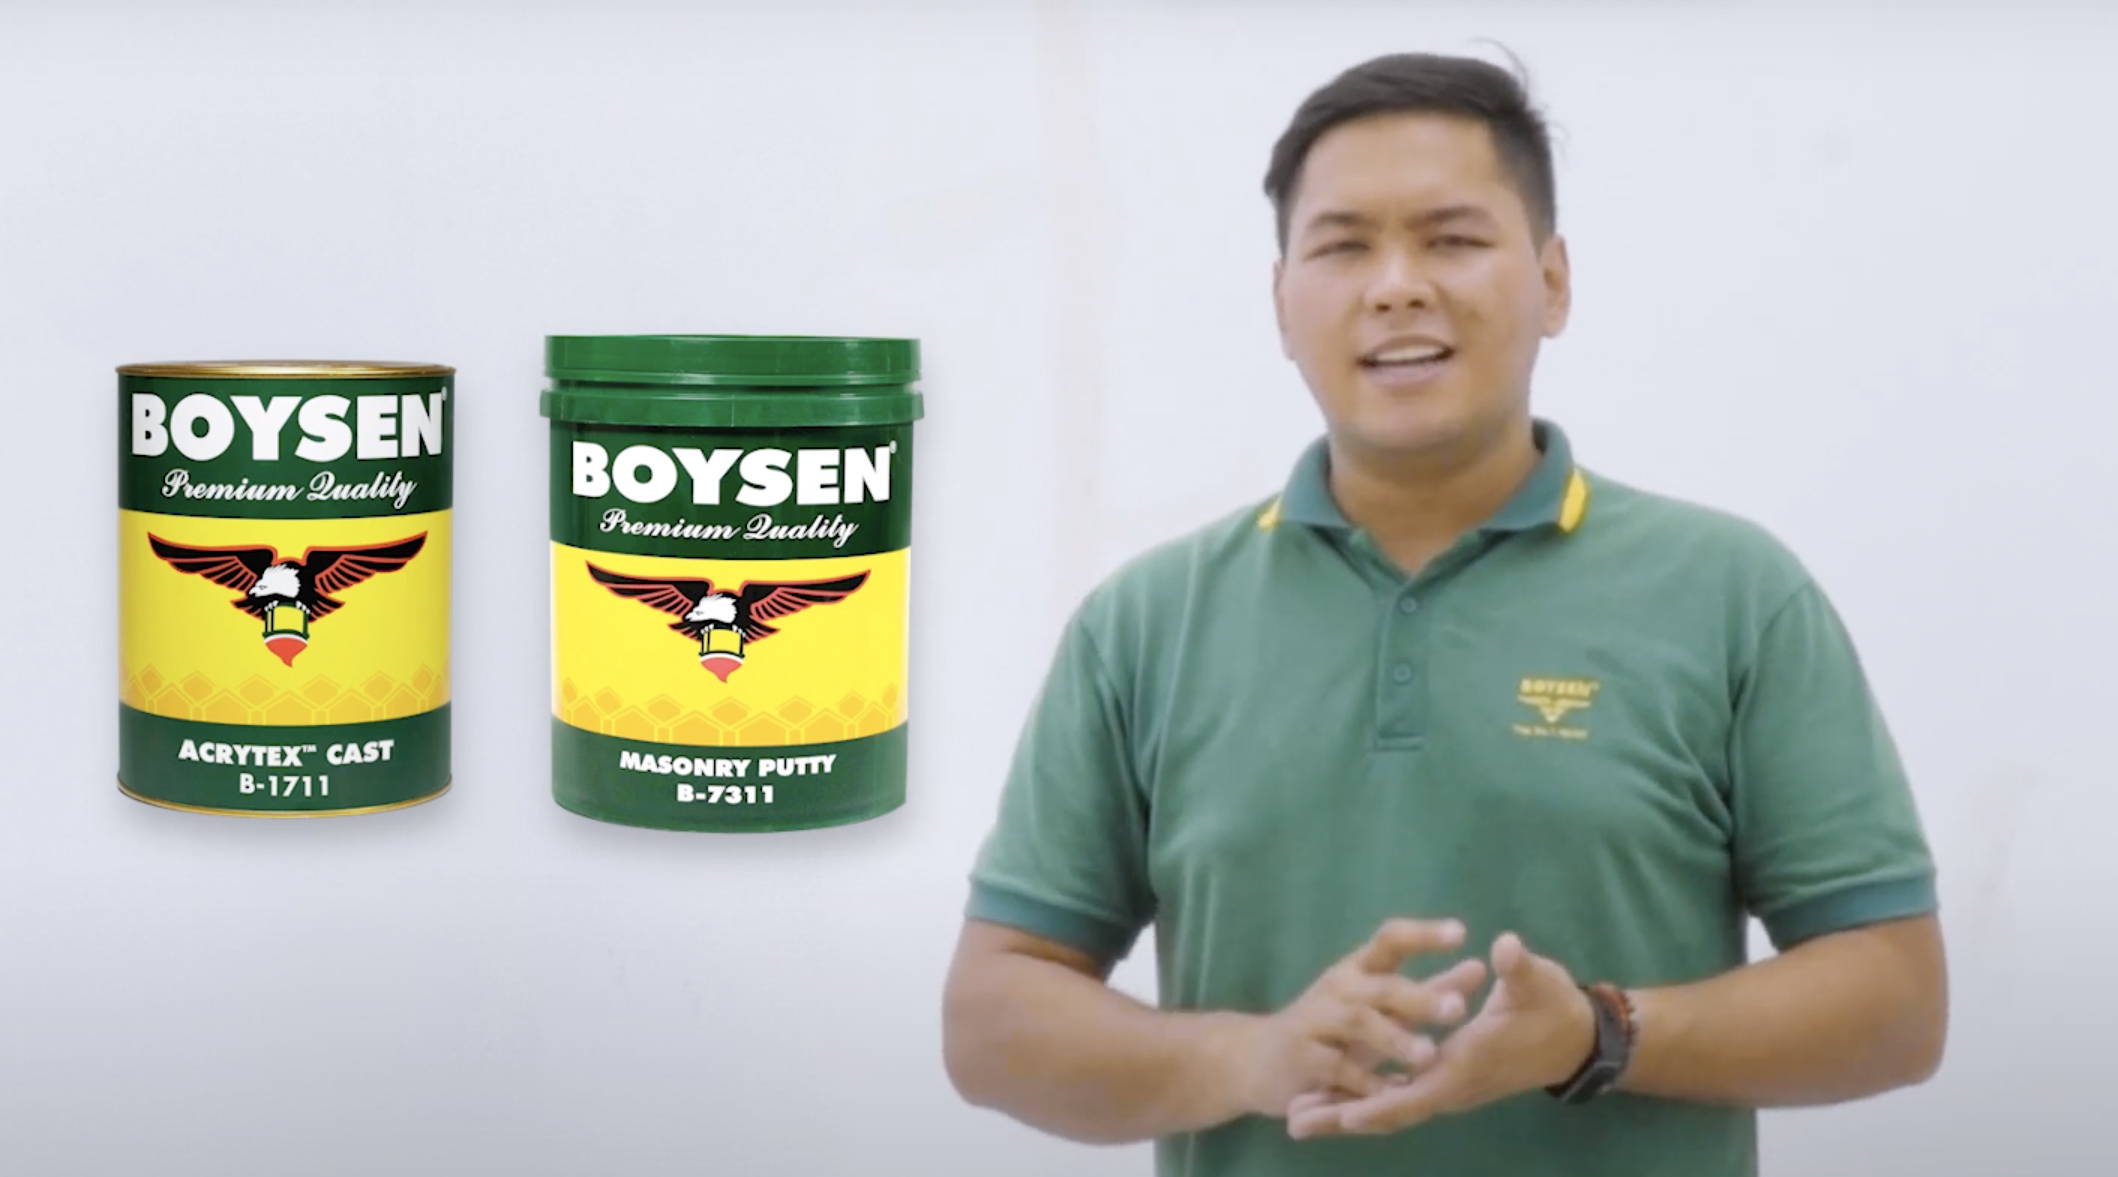 Boysen PinTanong Videoserye: How to Fix Hairline Cracks on Concrete Walls | MyBoysen